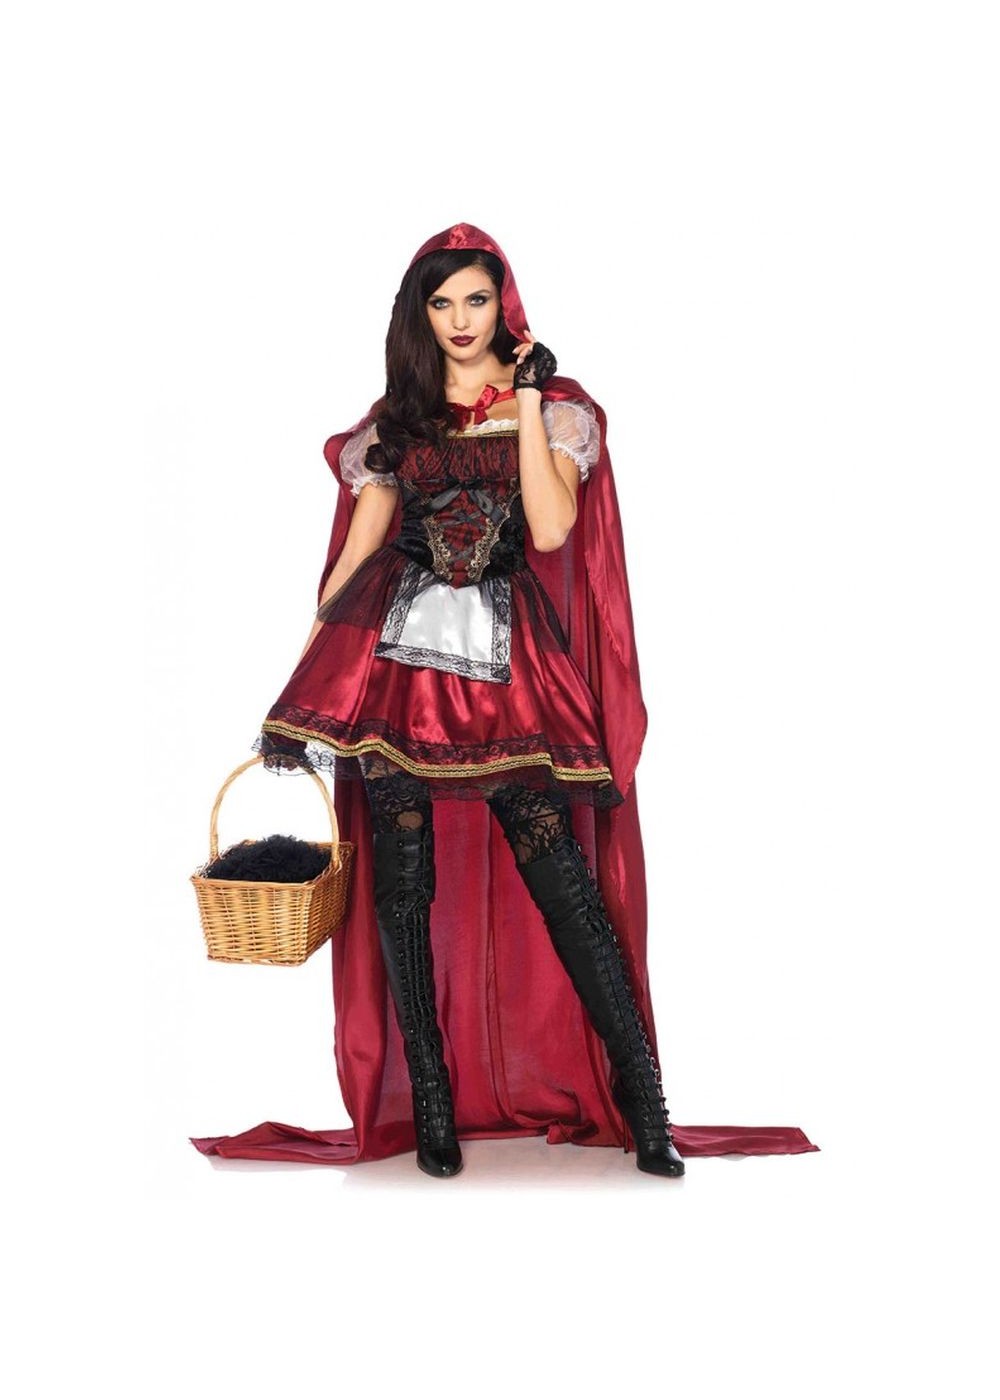 miss-red-riding-hood-women-costume